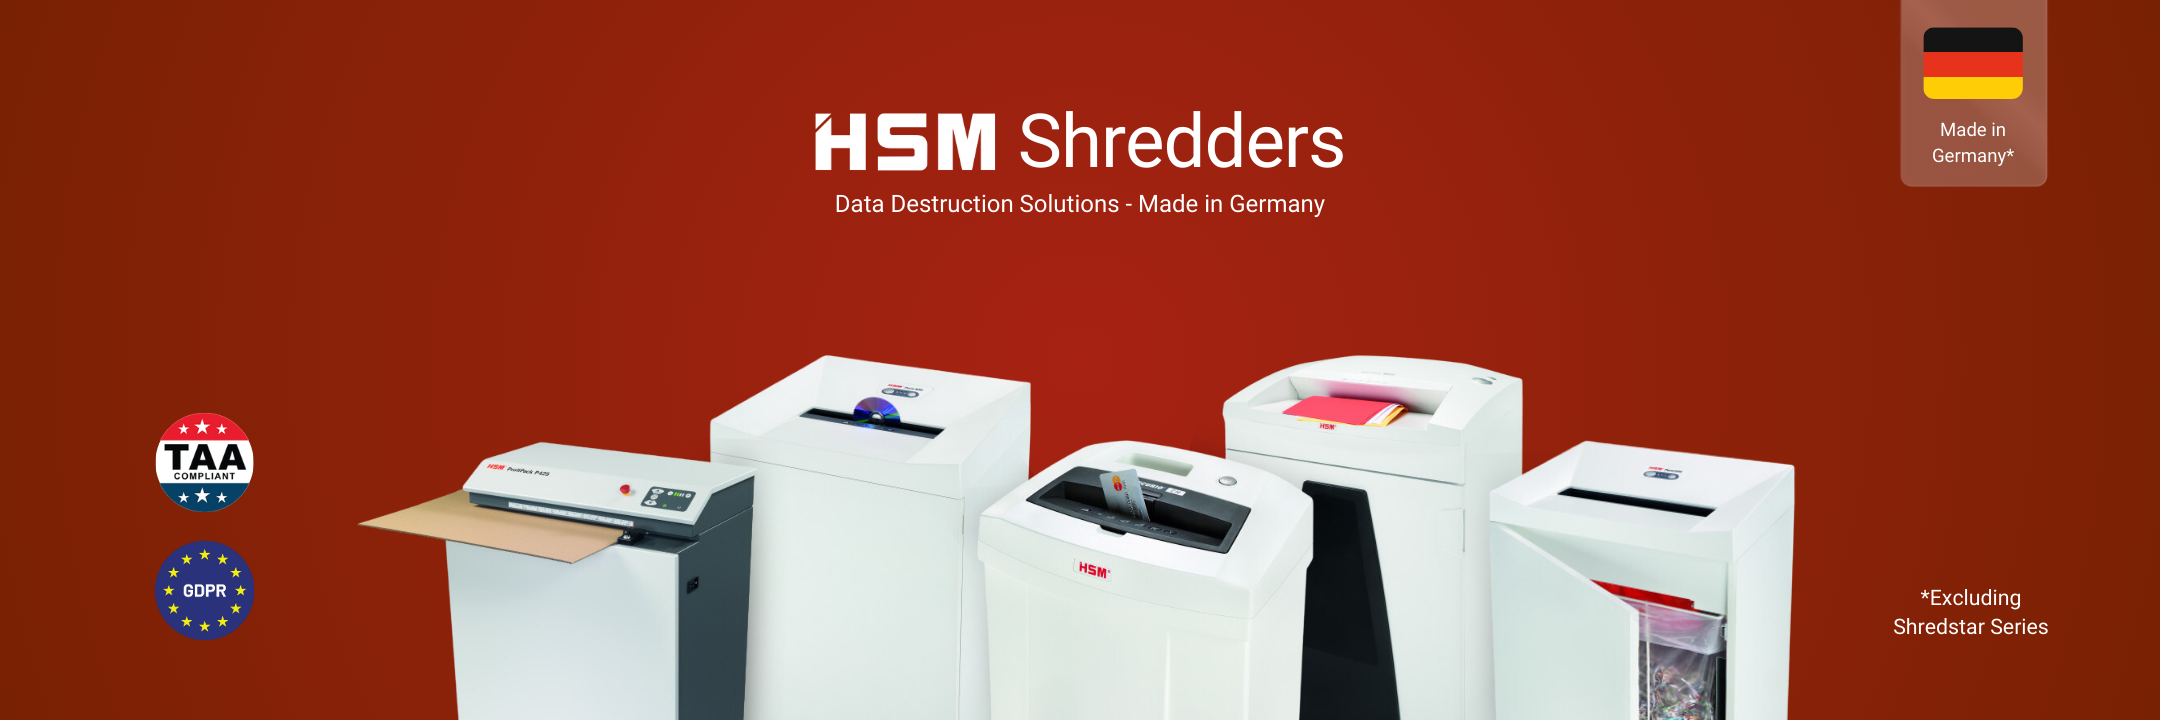 HSM Shredders